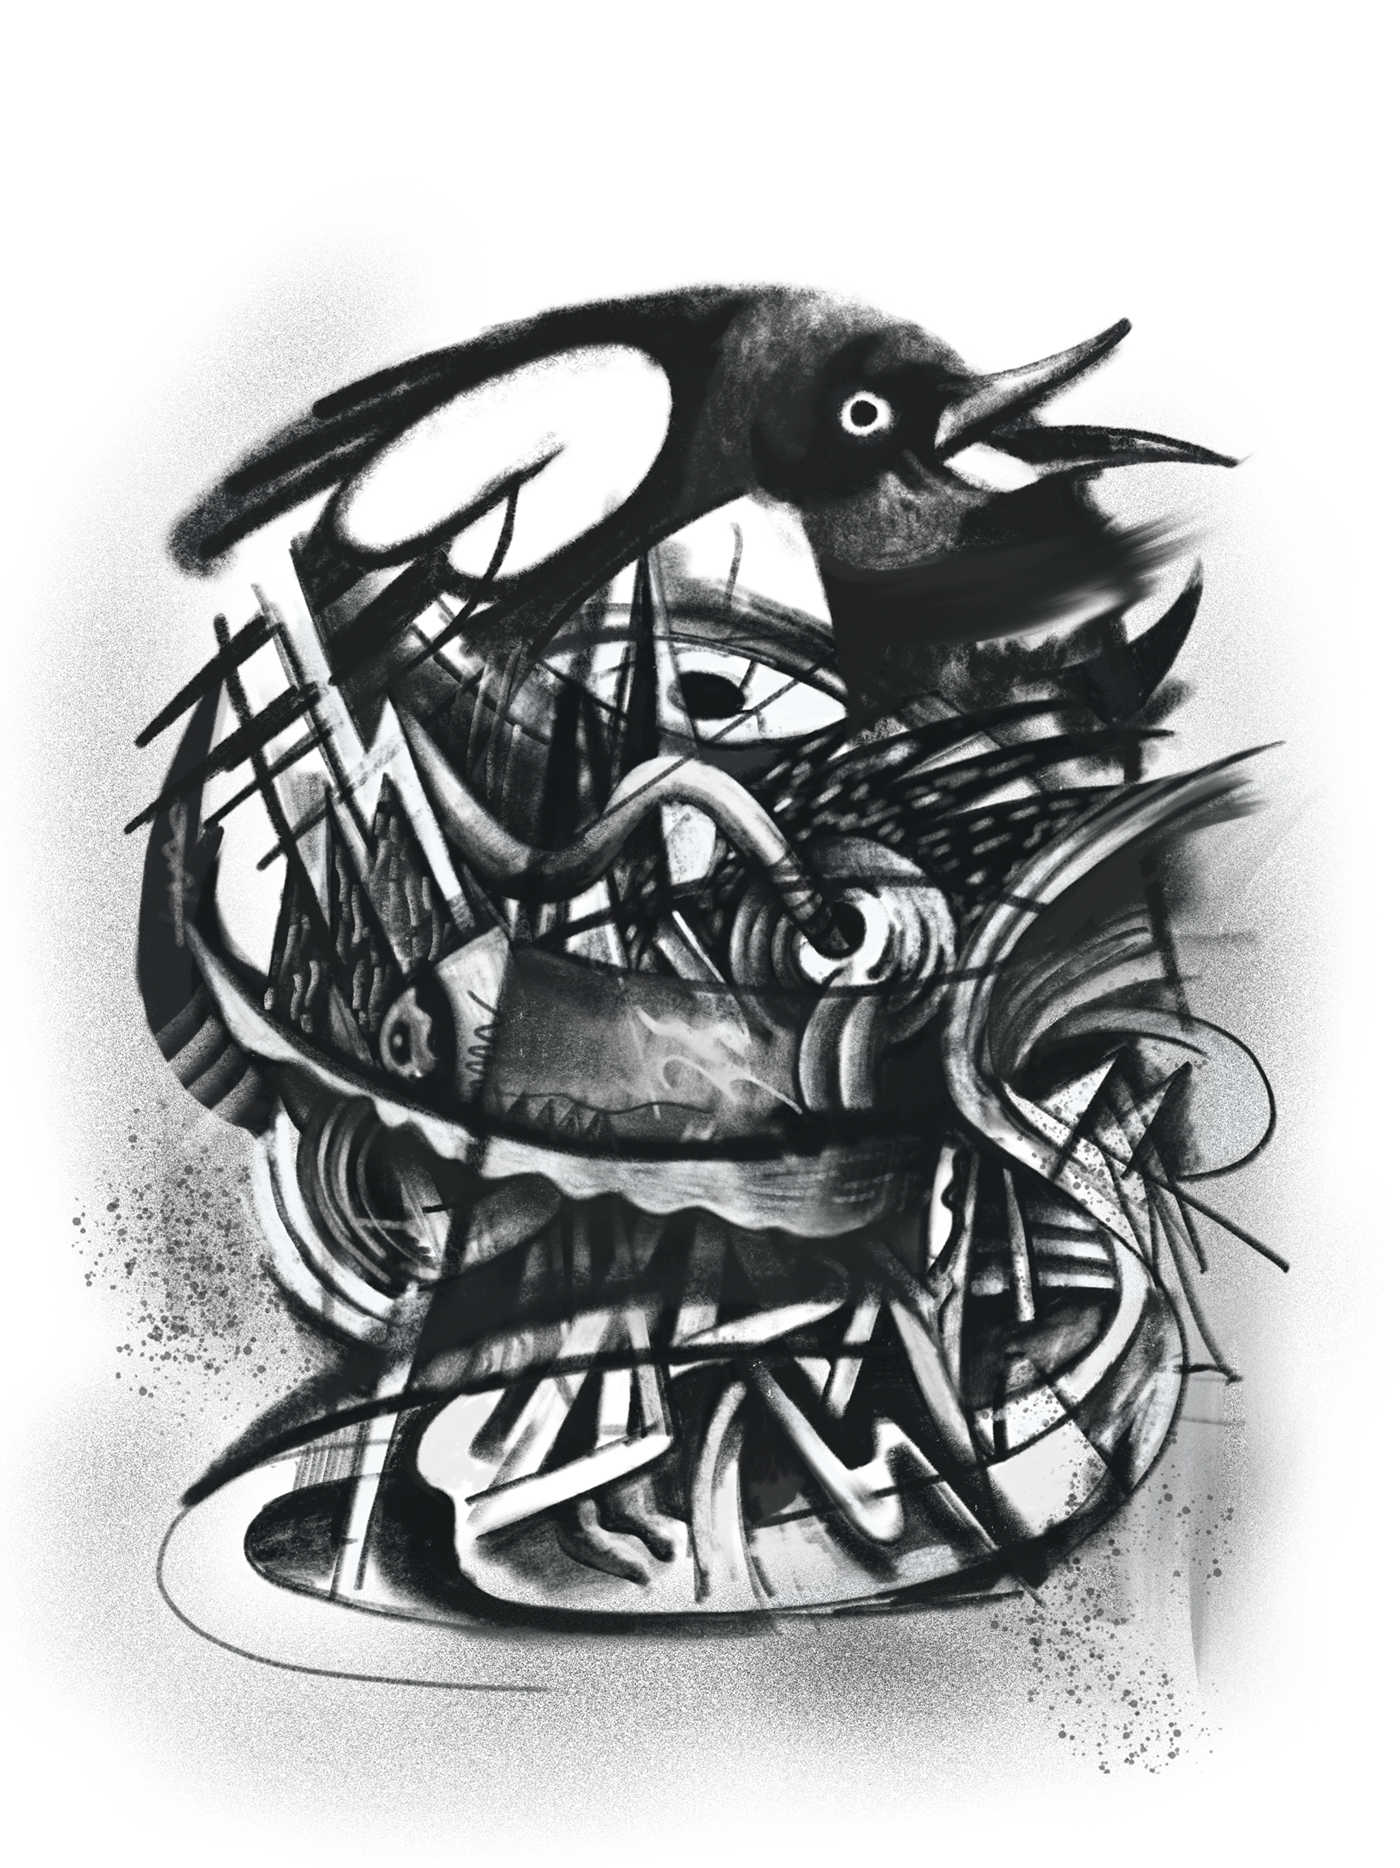 charcoal Digital Drawing ipadpro FakeCharcoal applepencil procreateapp didgitalart birds lifeforms